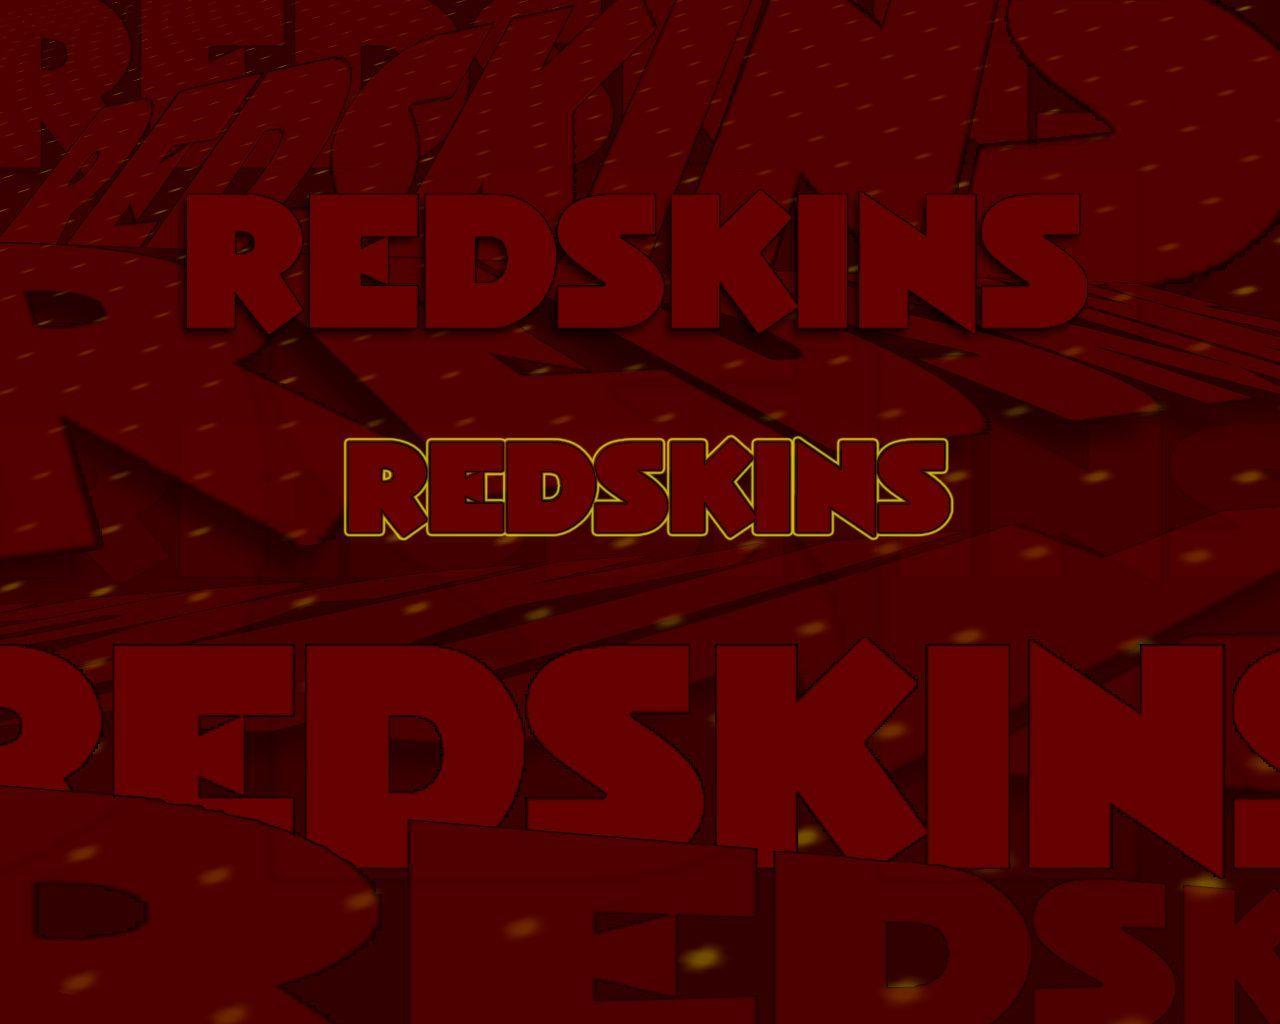 Washington Redskins Wallpaper. Fondos De Pantalla De Washington